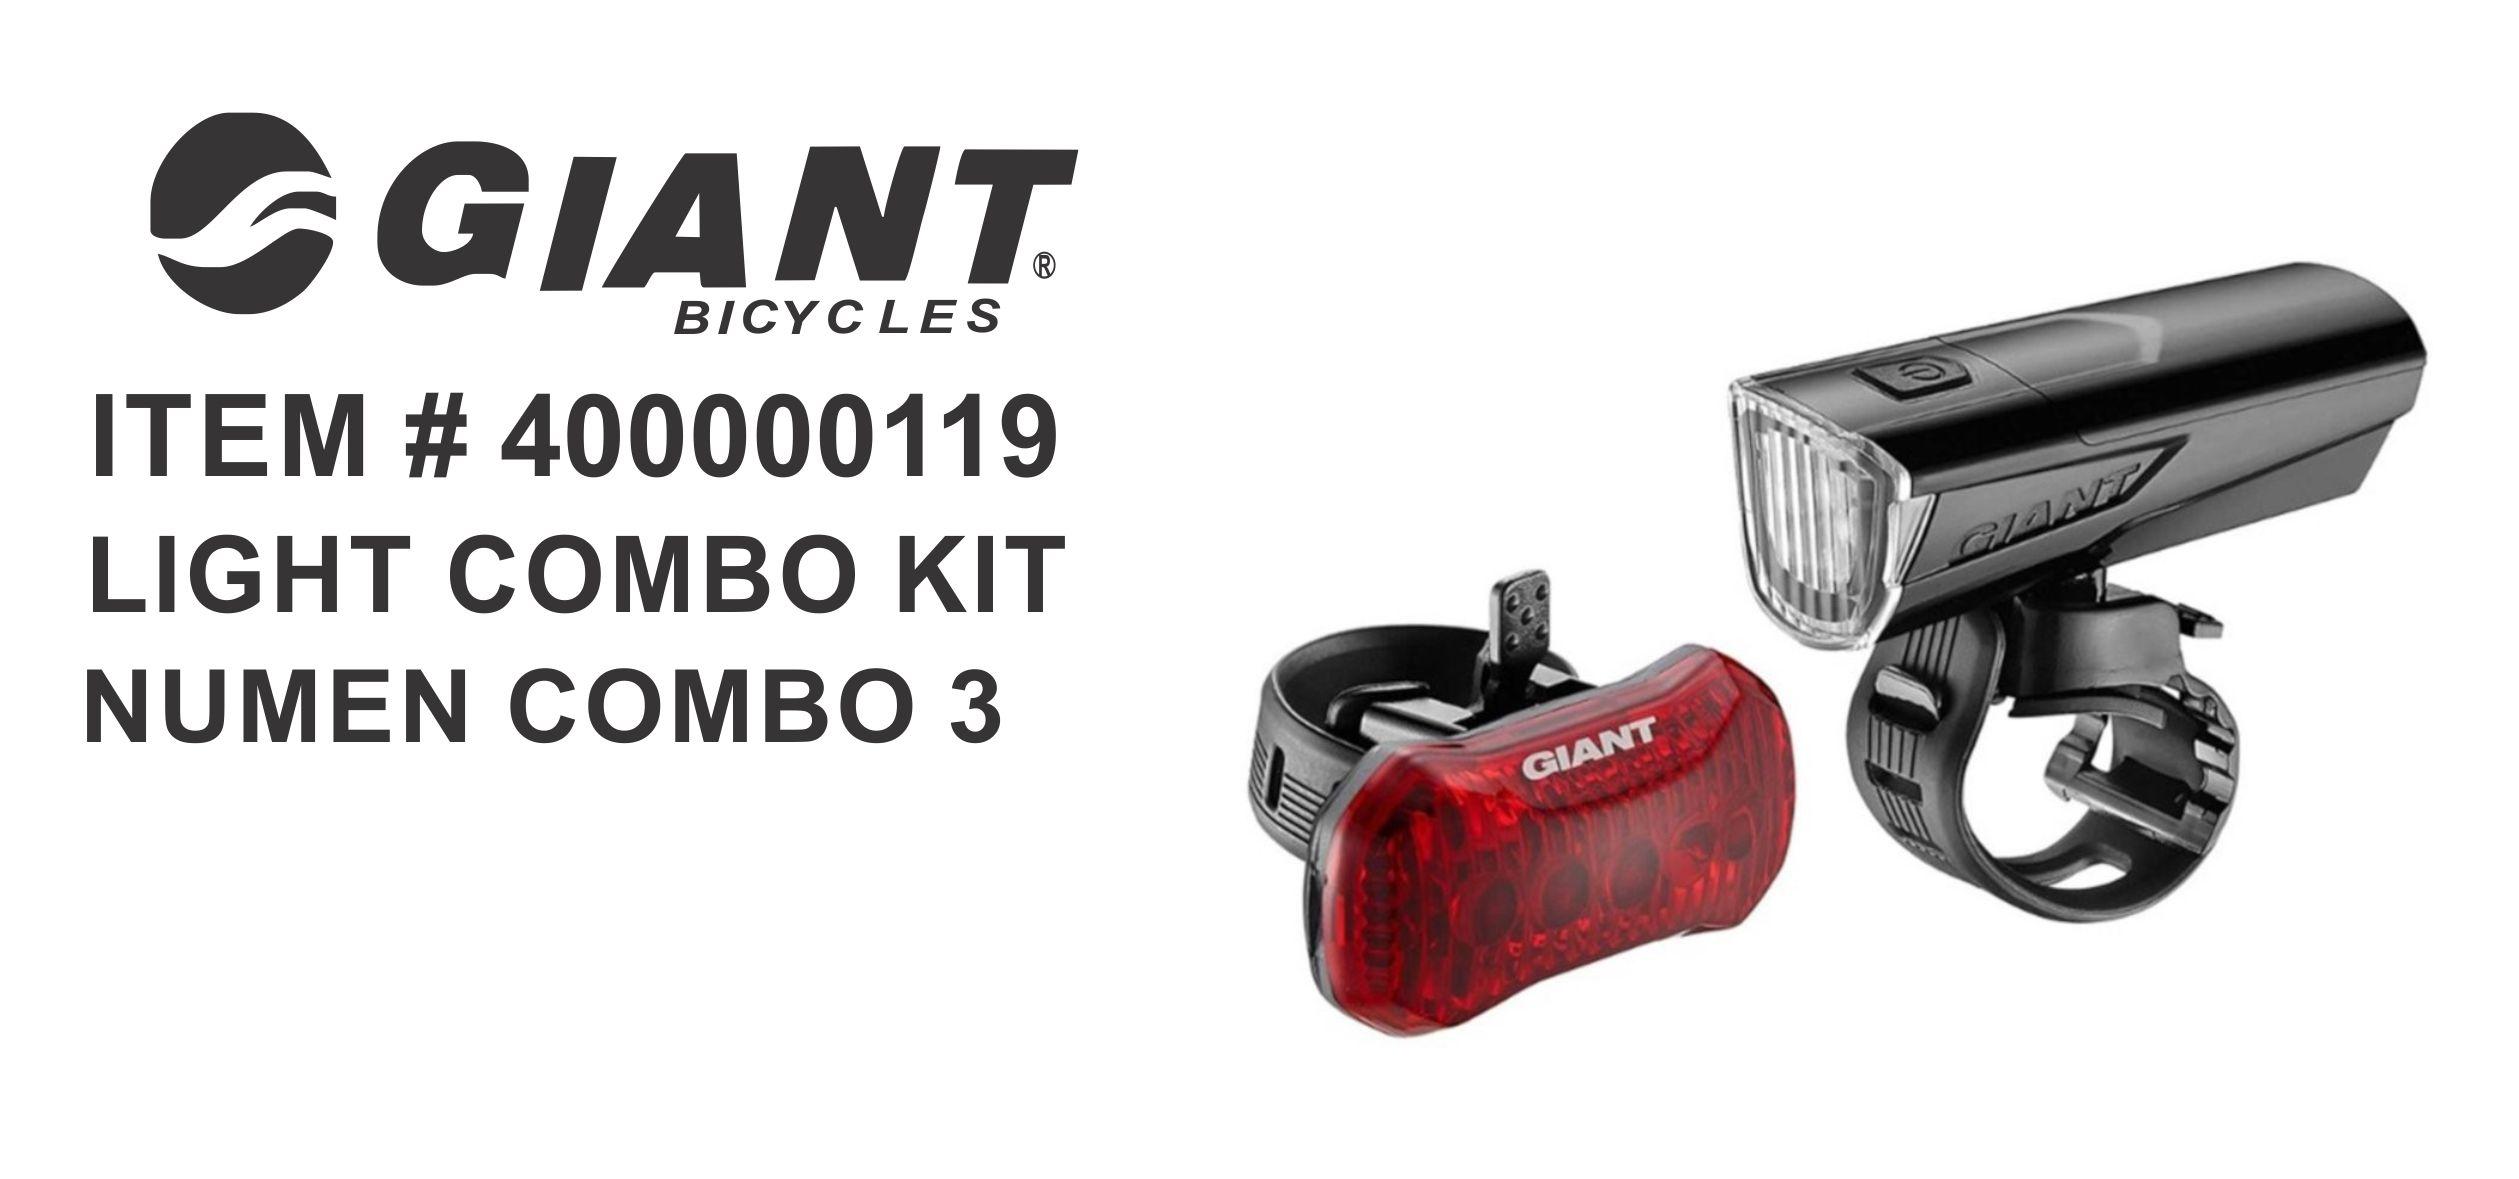 Giant Light Combo Kit Numen Combo 3 - 400000119